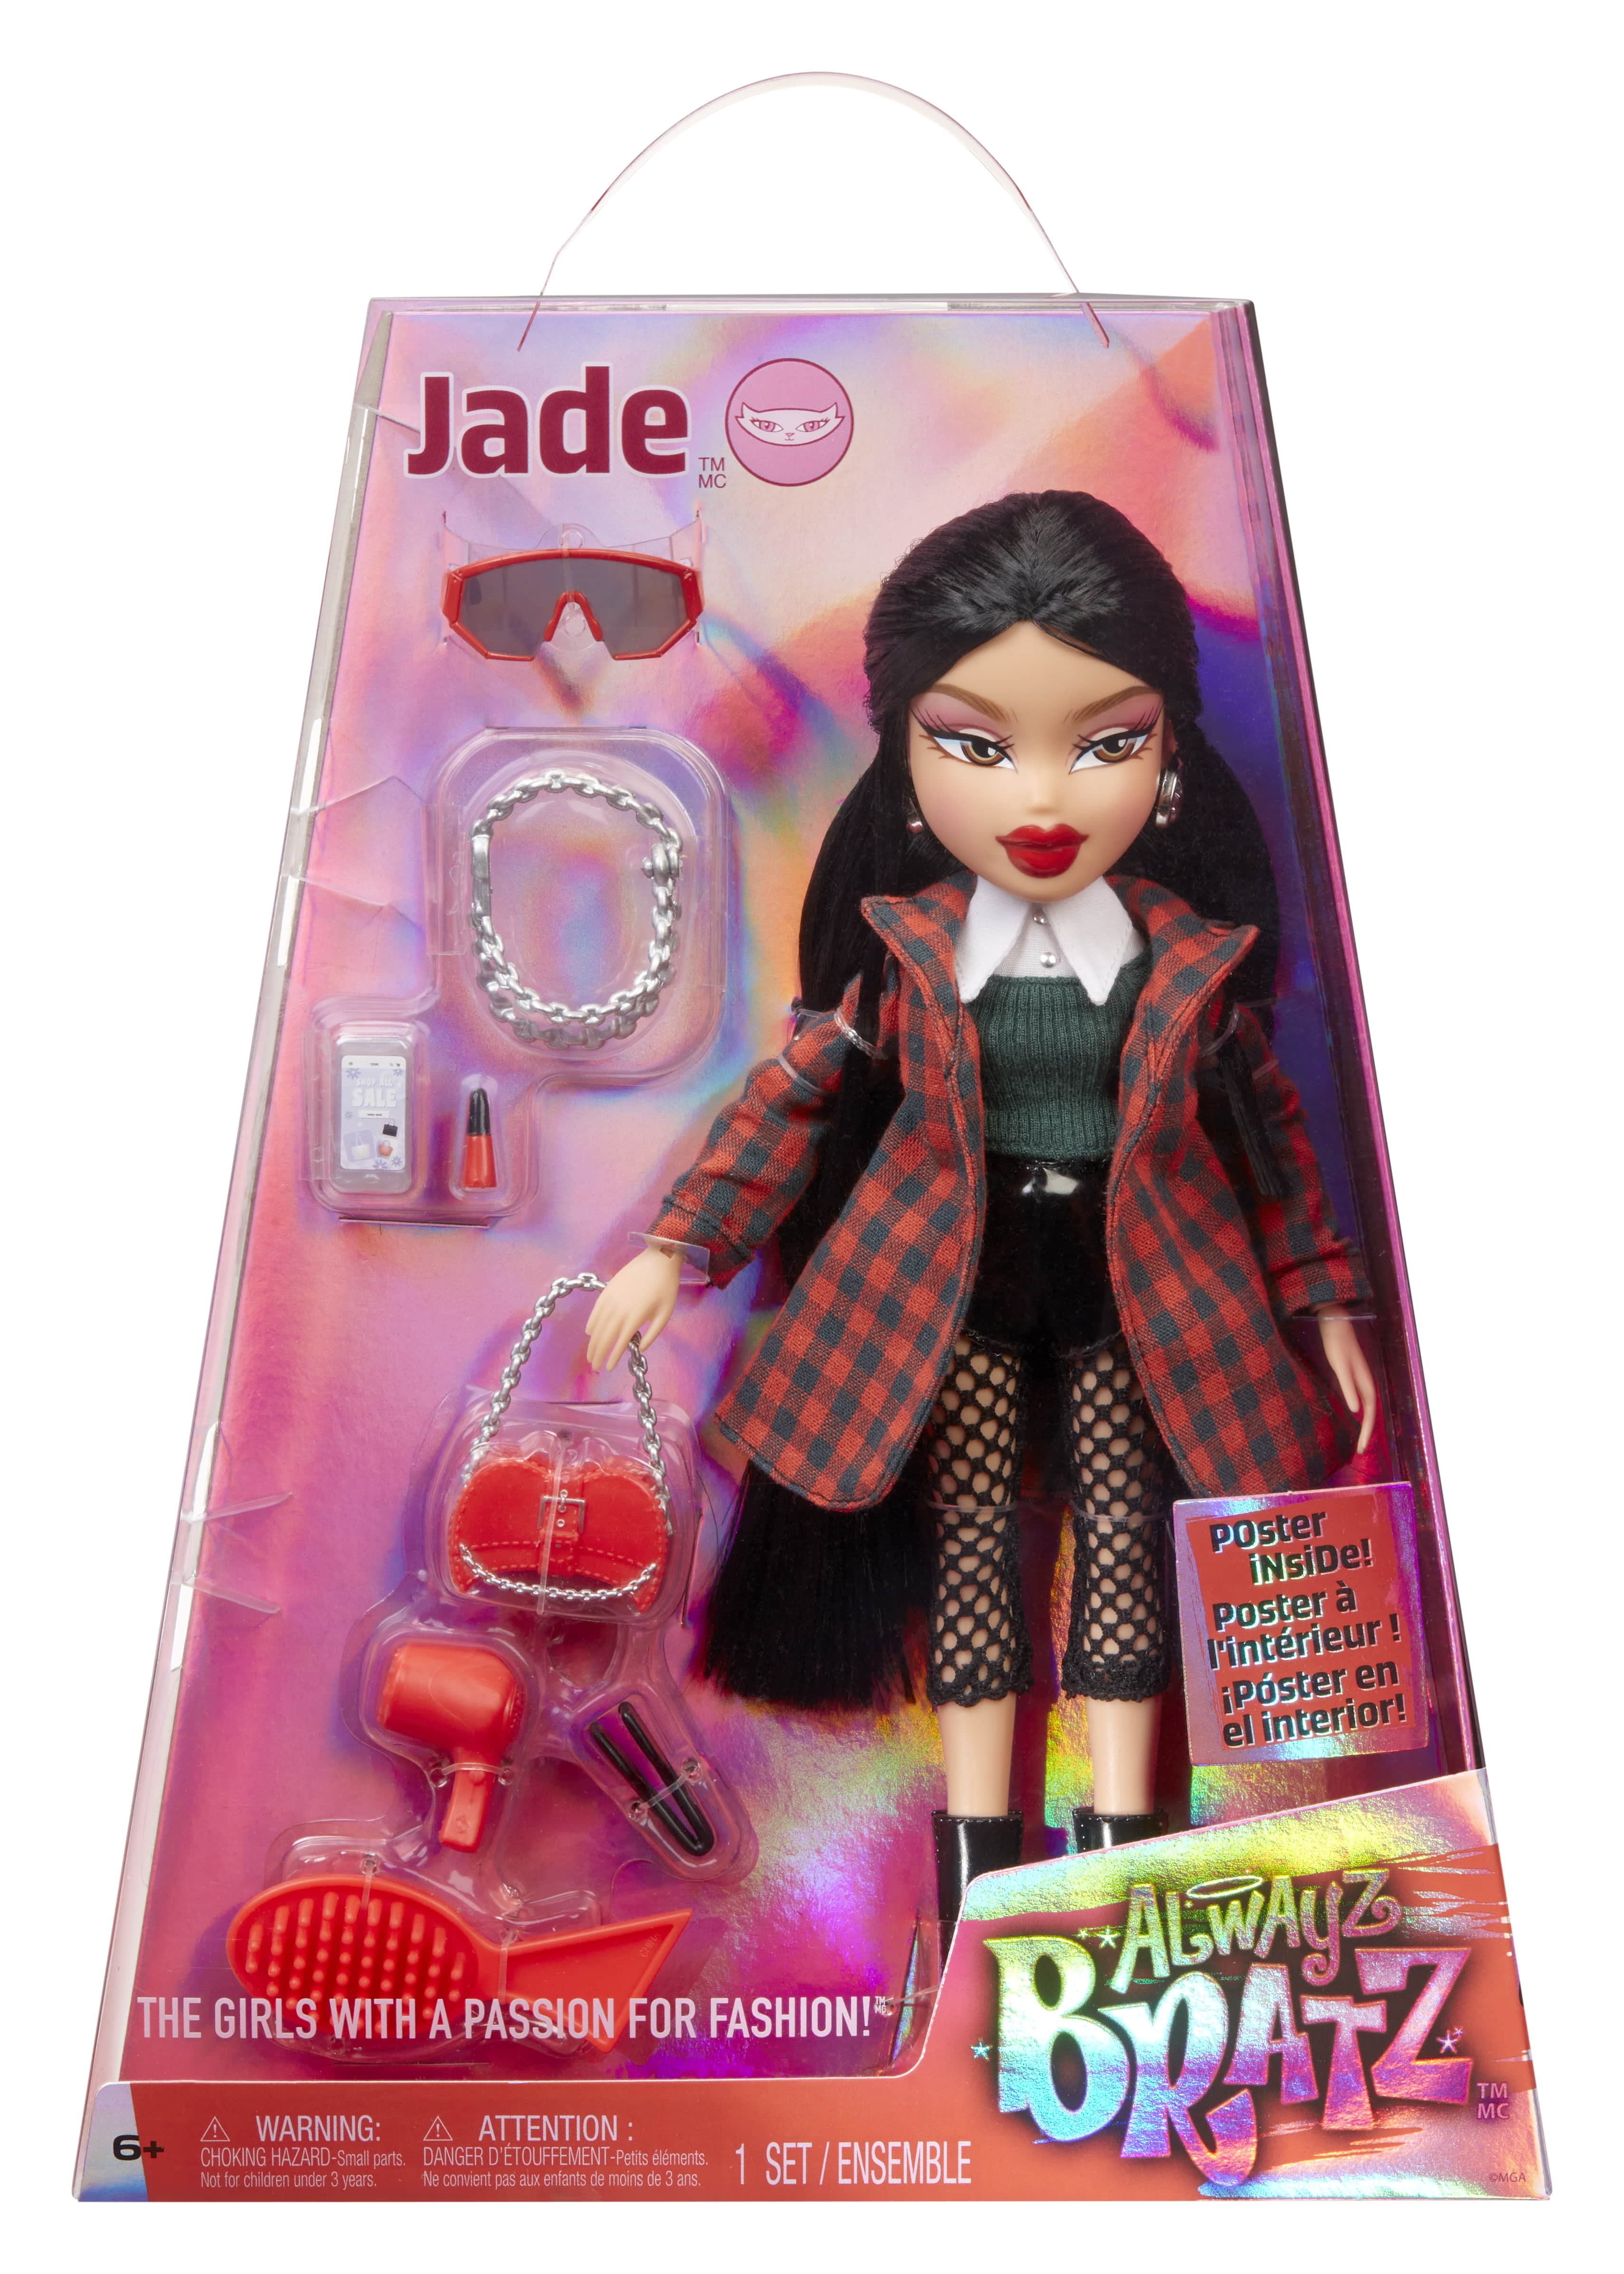 Alwayz Bratz Jade Fashion Doll with 10 Accessories and Poster